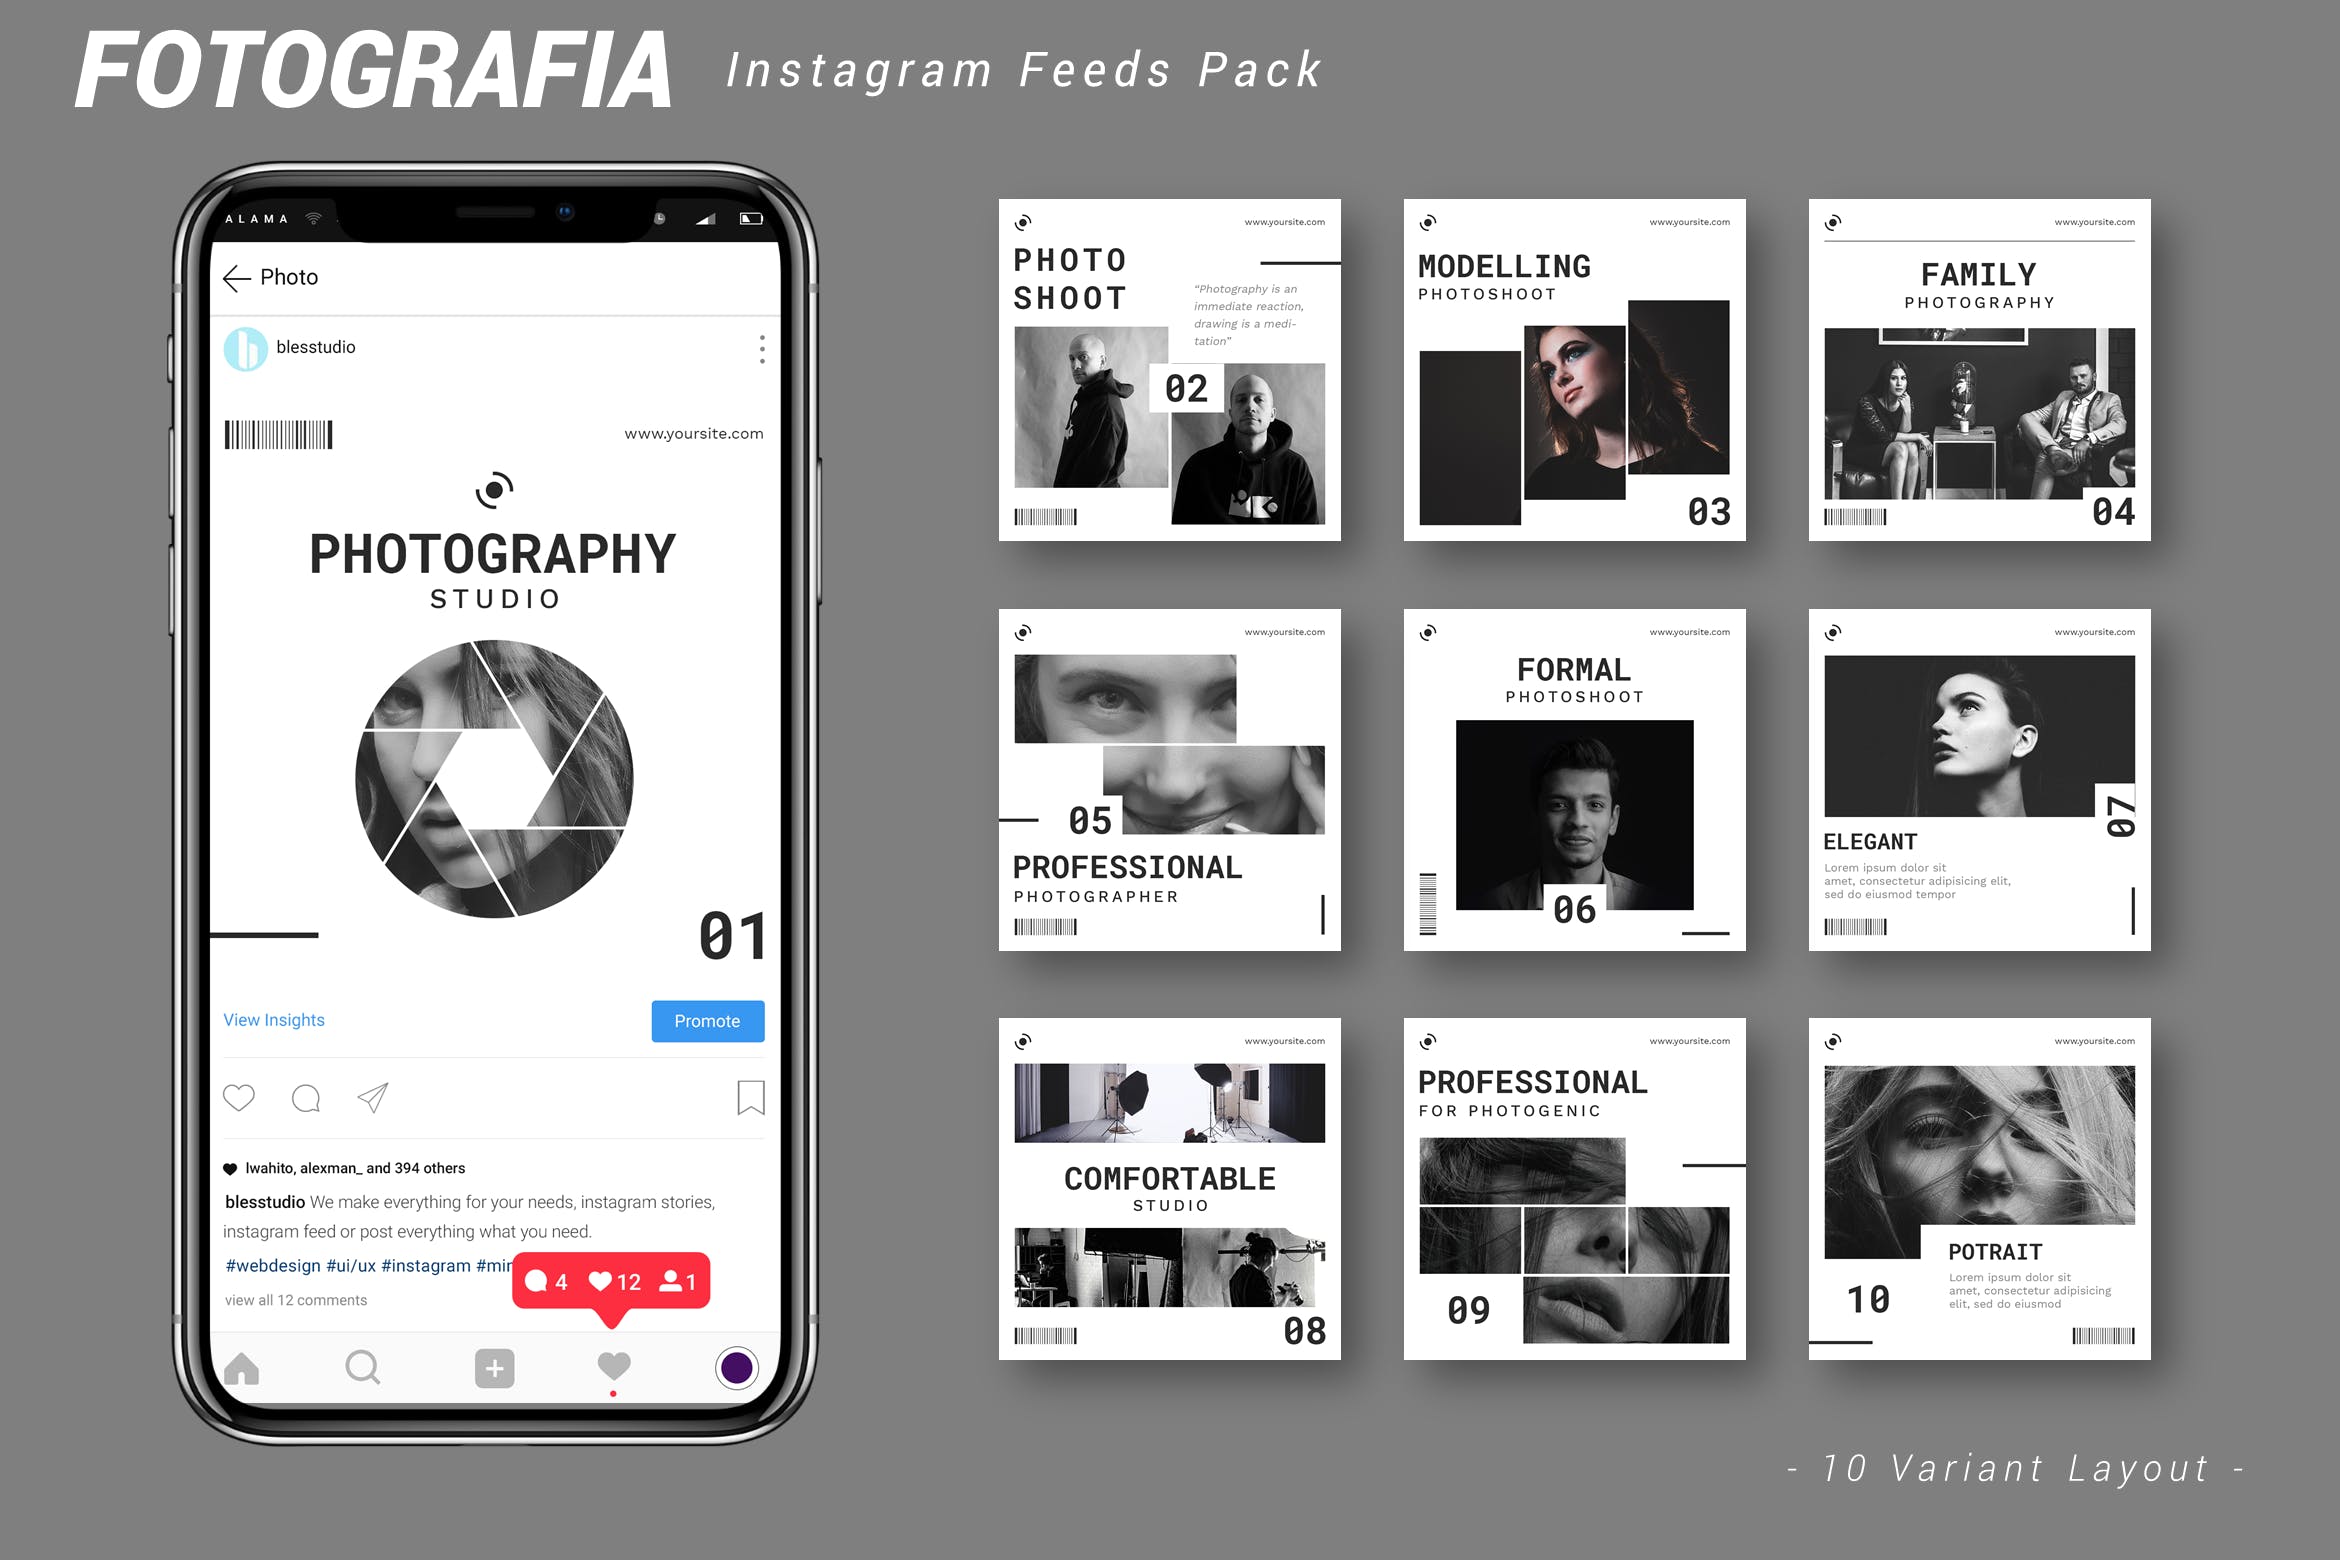 Instagram信息流黑白配色贴图设计模板第一素材精选 Fotografia – Instagram Feeds Pack插图